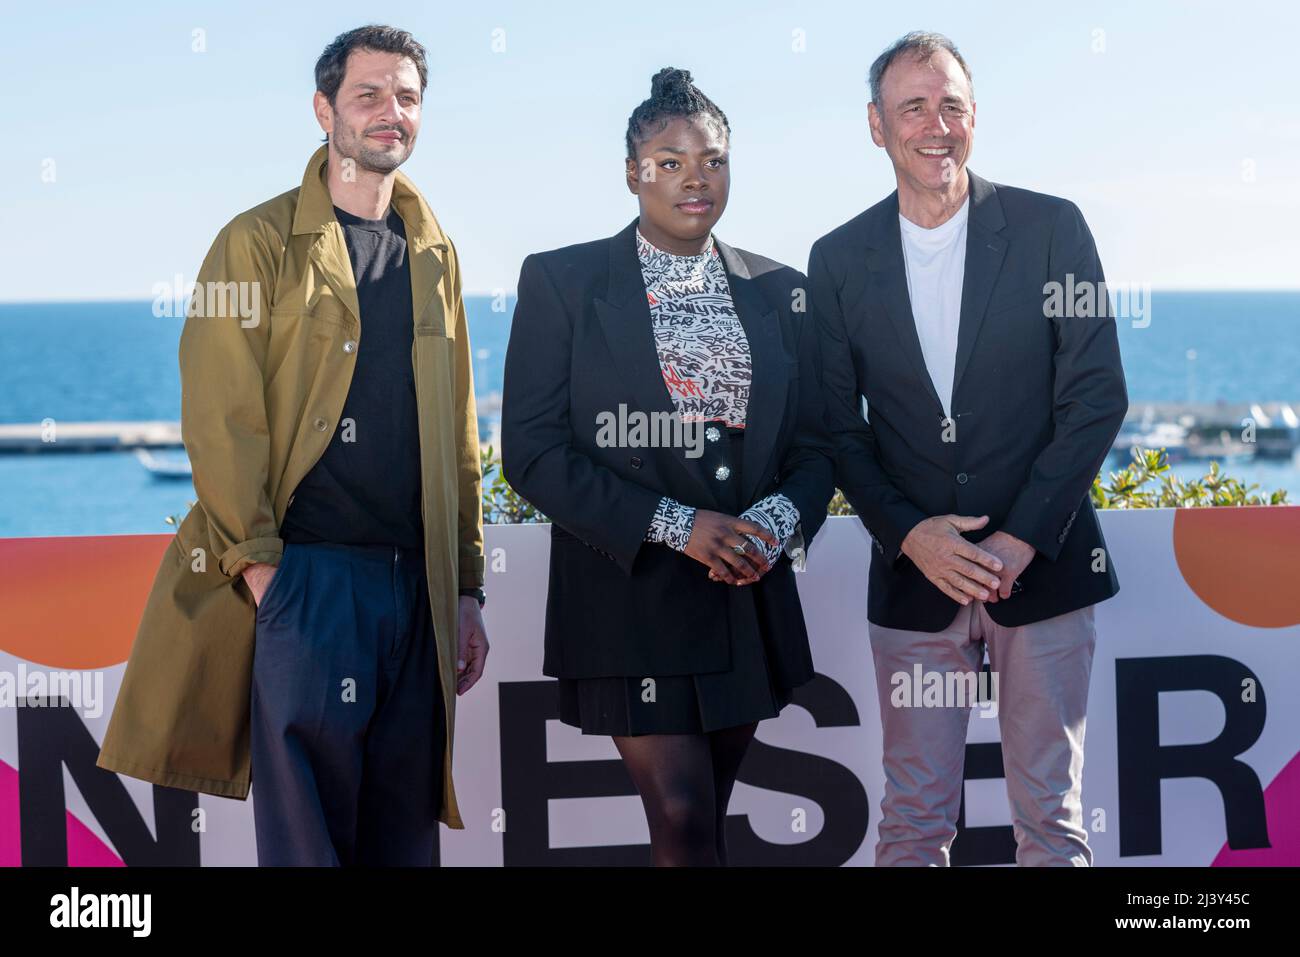 CANNES, FRANCIA - APRILE 05 2022, Marc Ruchmann, Chinenye Ezeudu e Anthony Horowitz partecipano alla Fotografia 'Short Films Jury' durante il Festival delle Canneseries 5th a Cannes, Francia Foto Stock